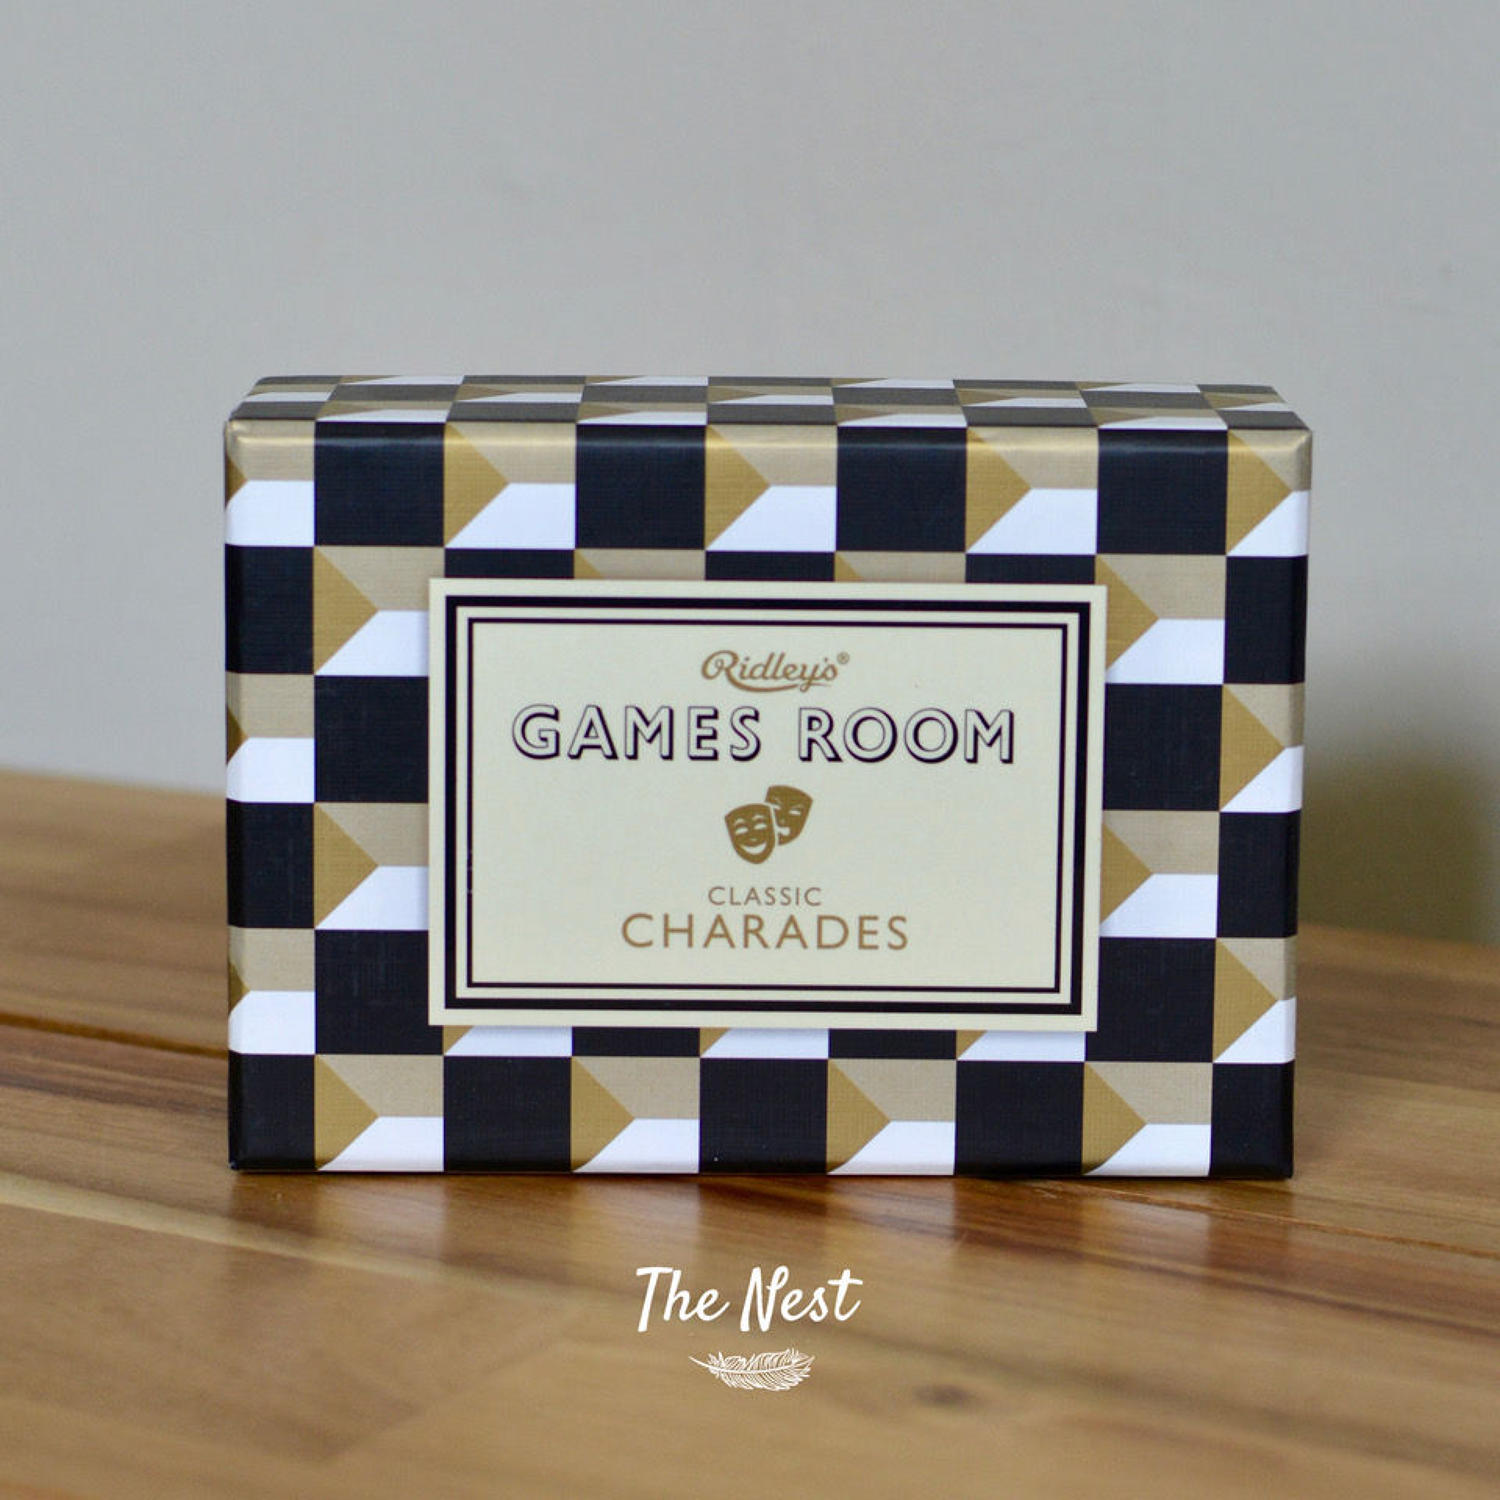 Games Room - Charades